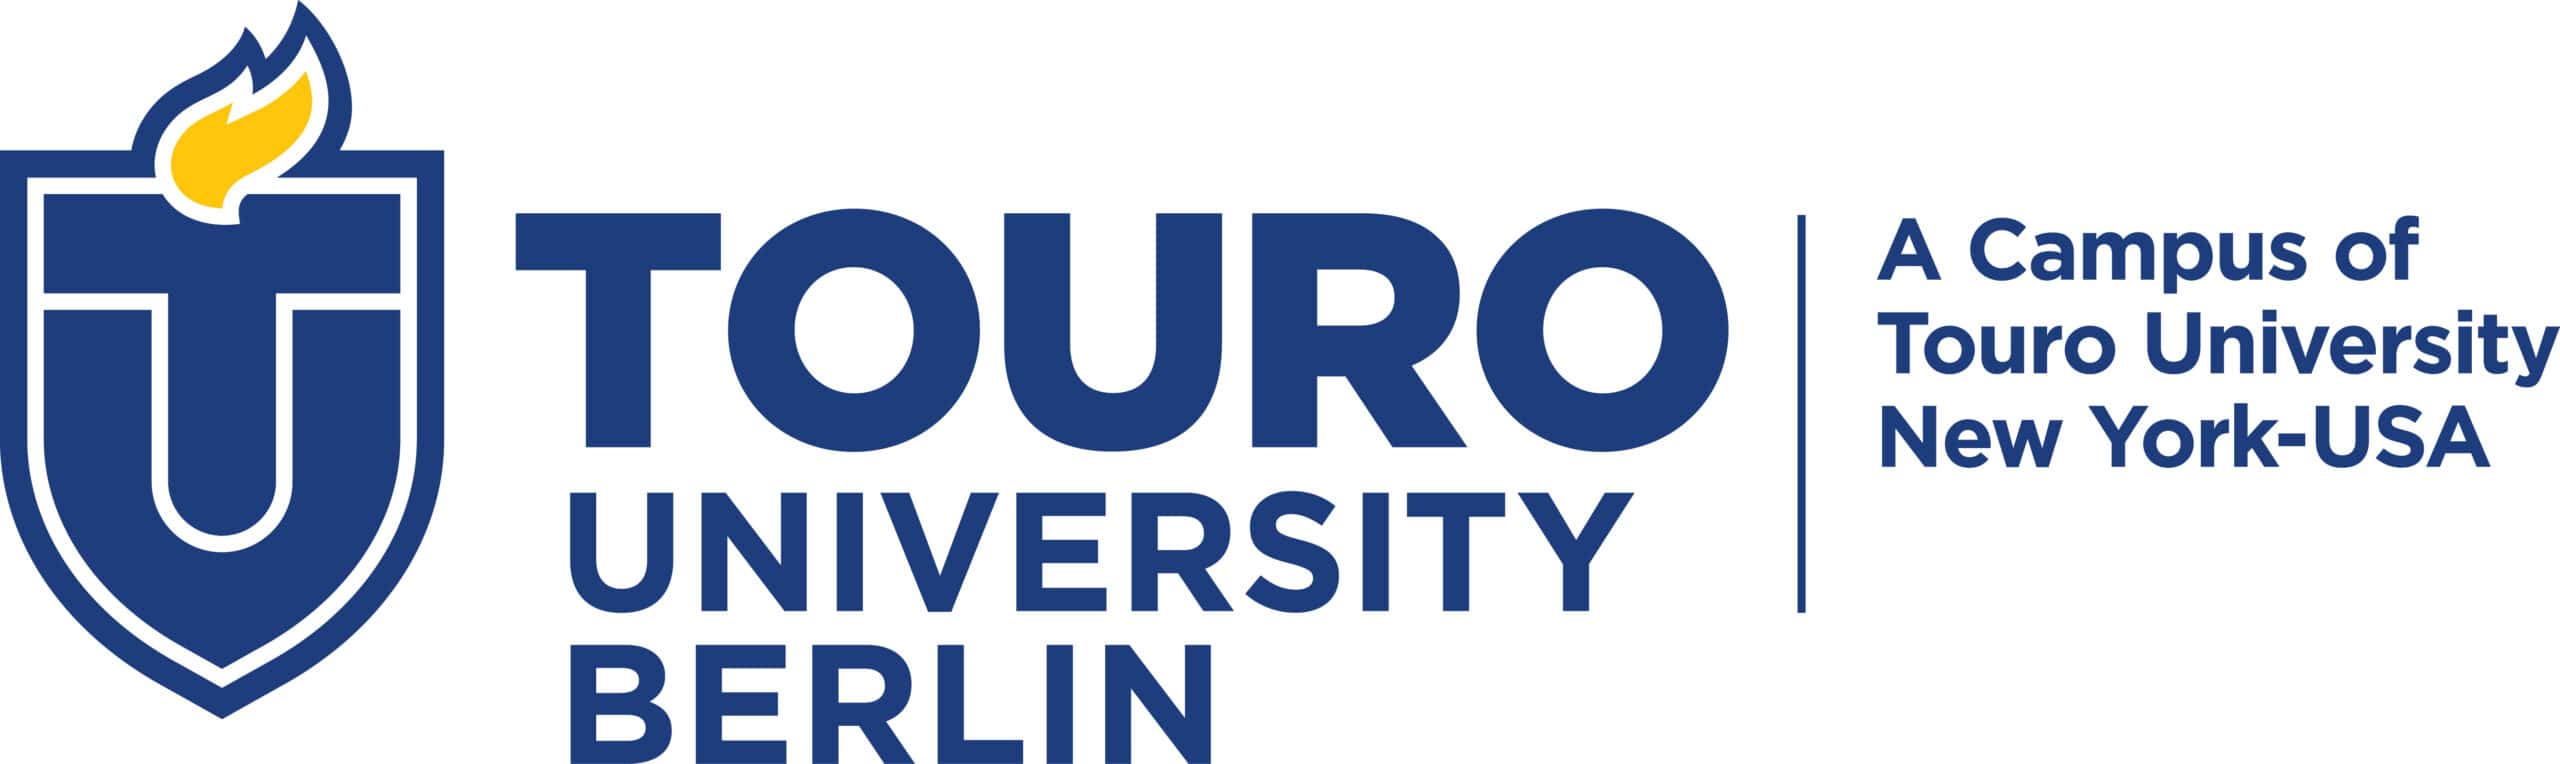 Touro University Berlin | A Campus of Touro University New York • USA